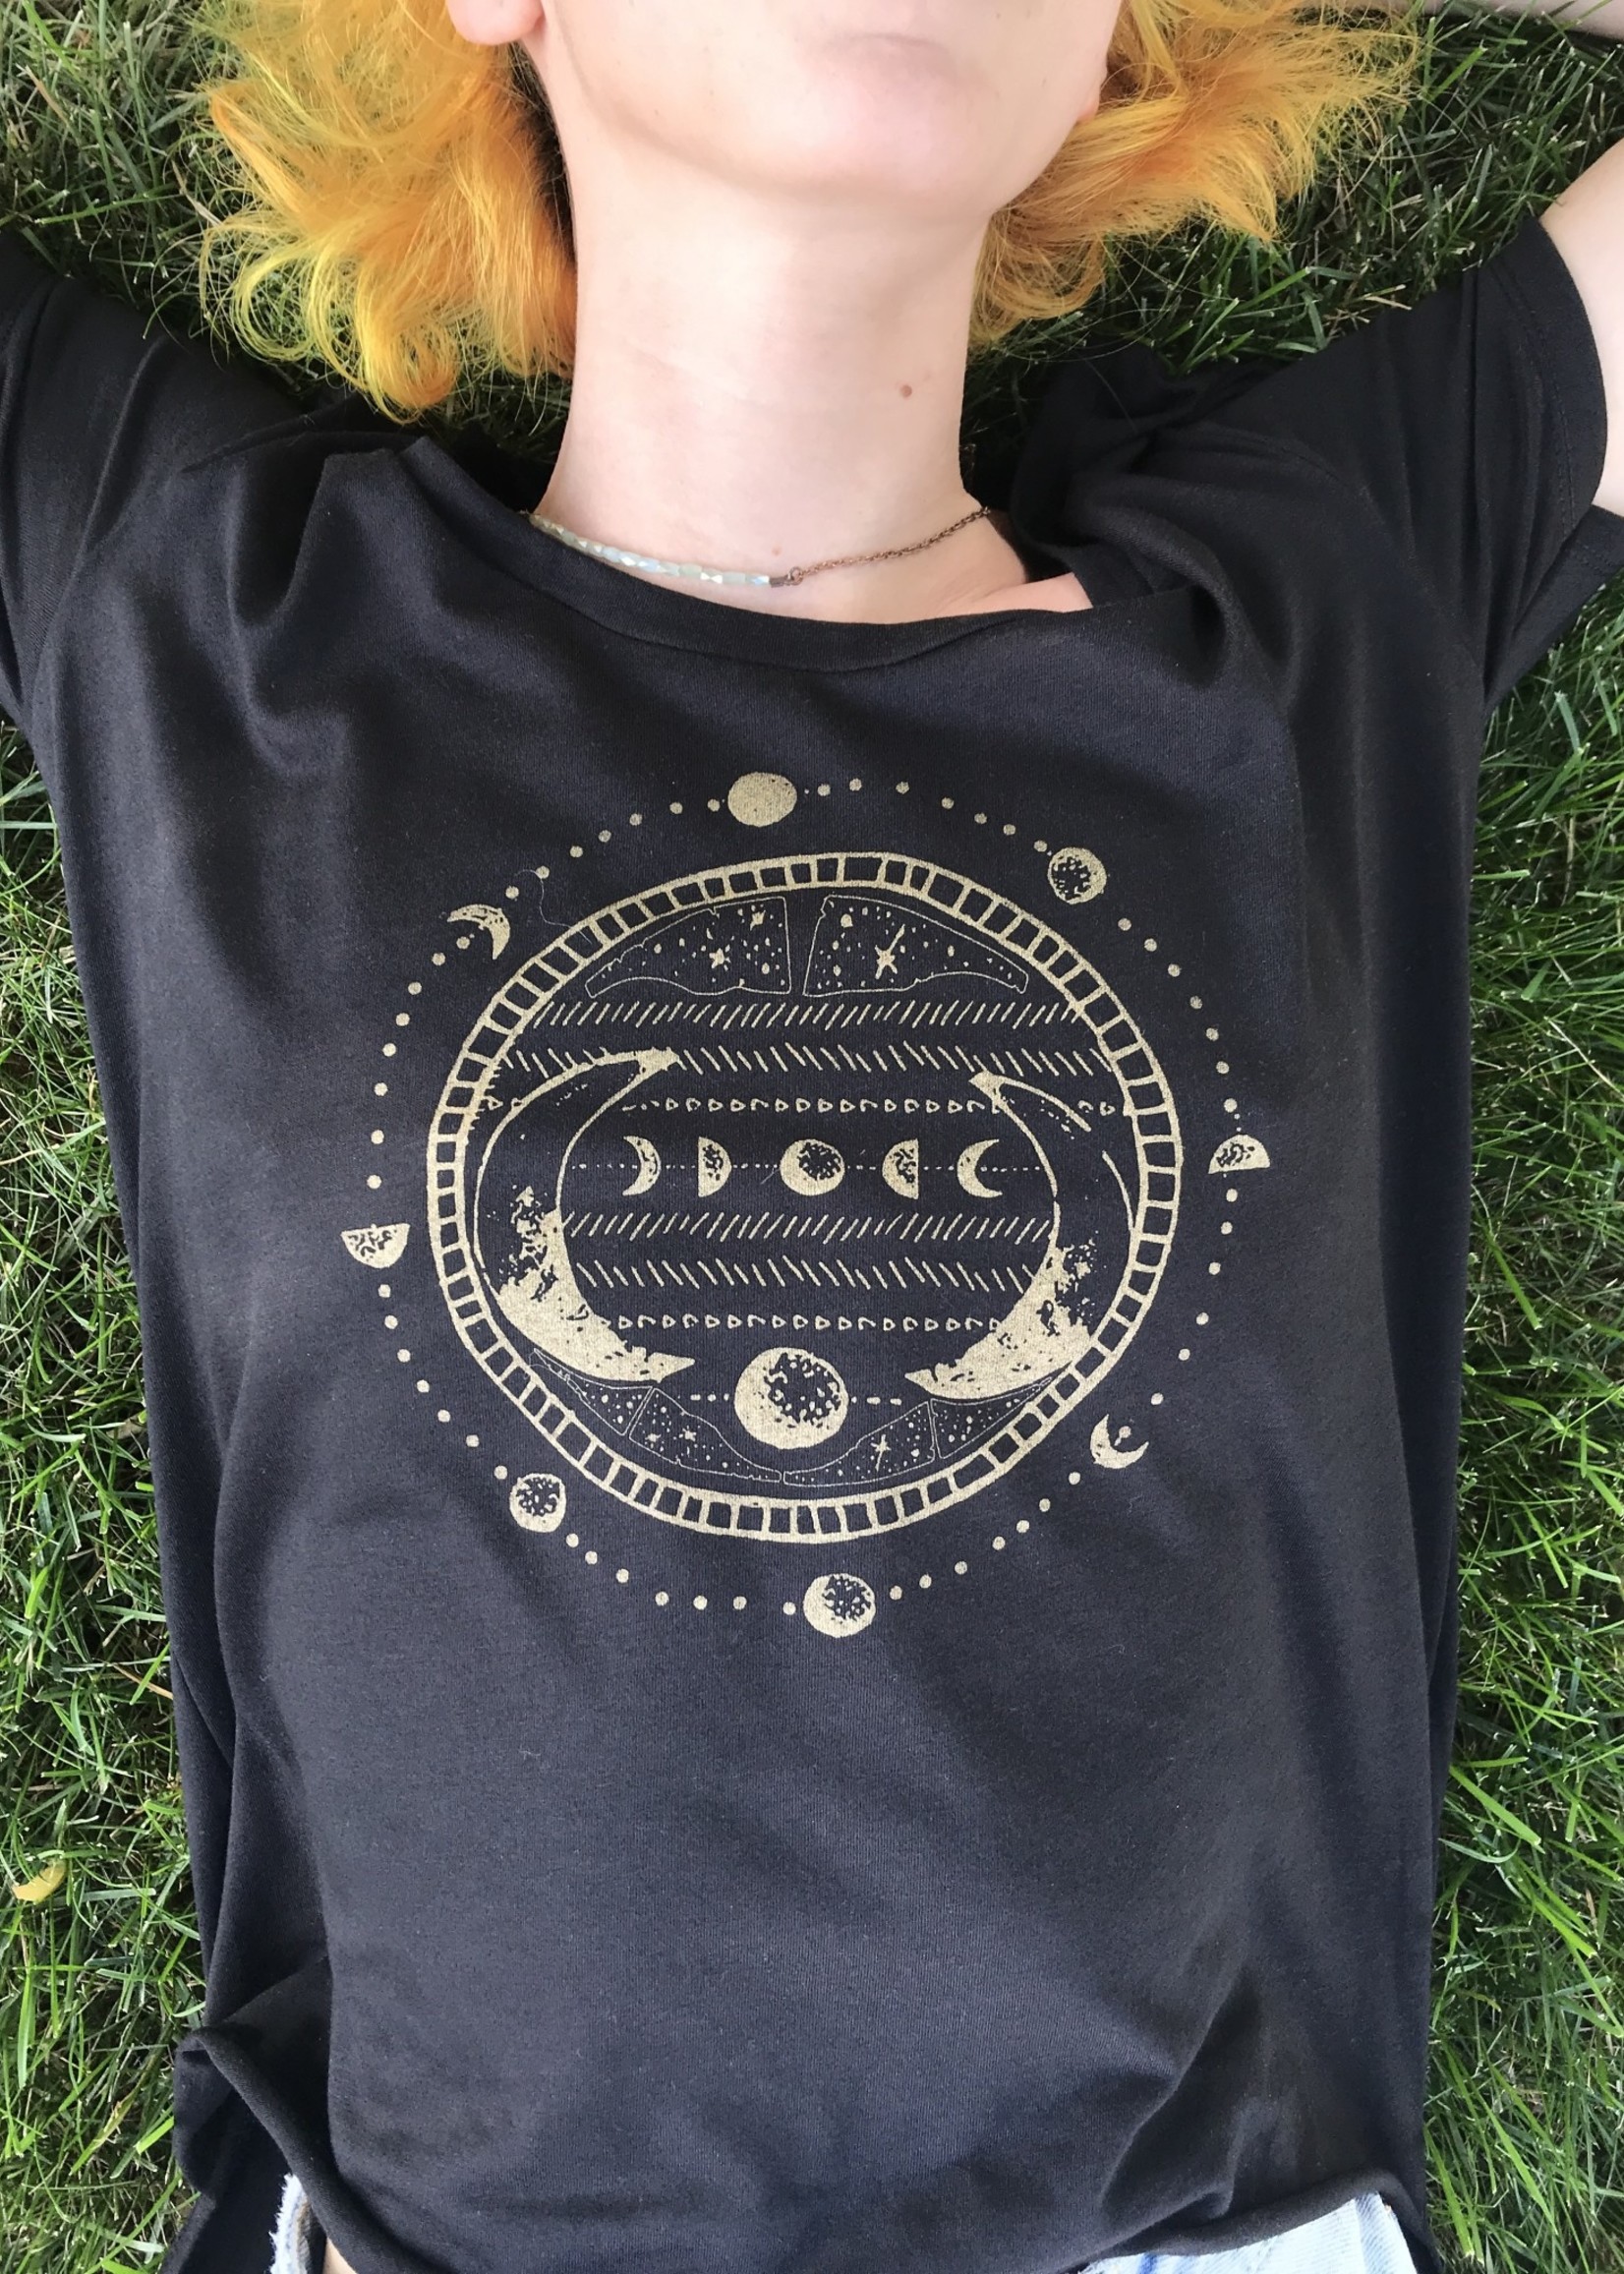 Moon Phase Women's Festival Adult T-Shirt